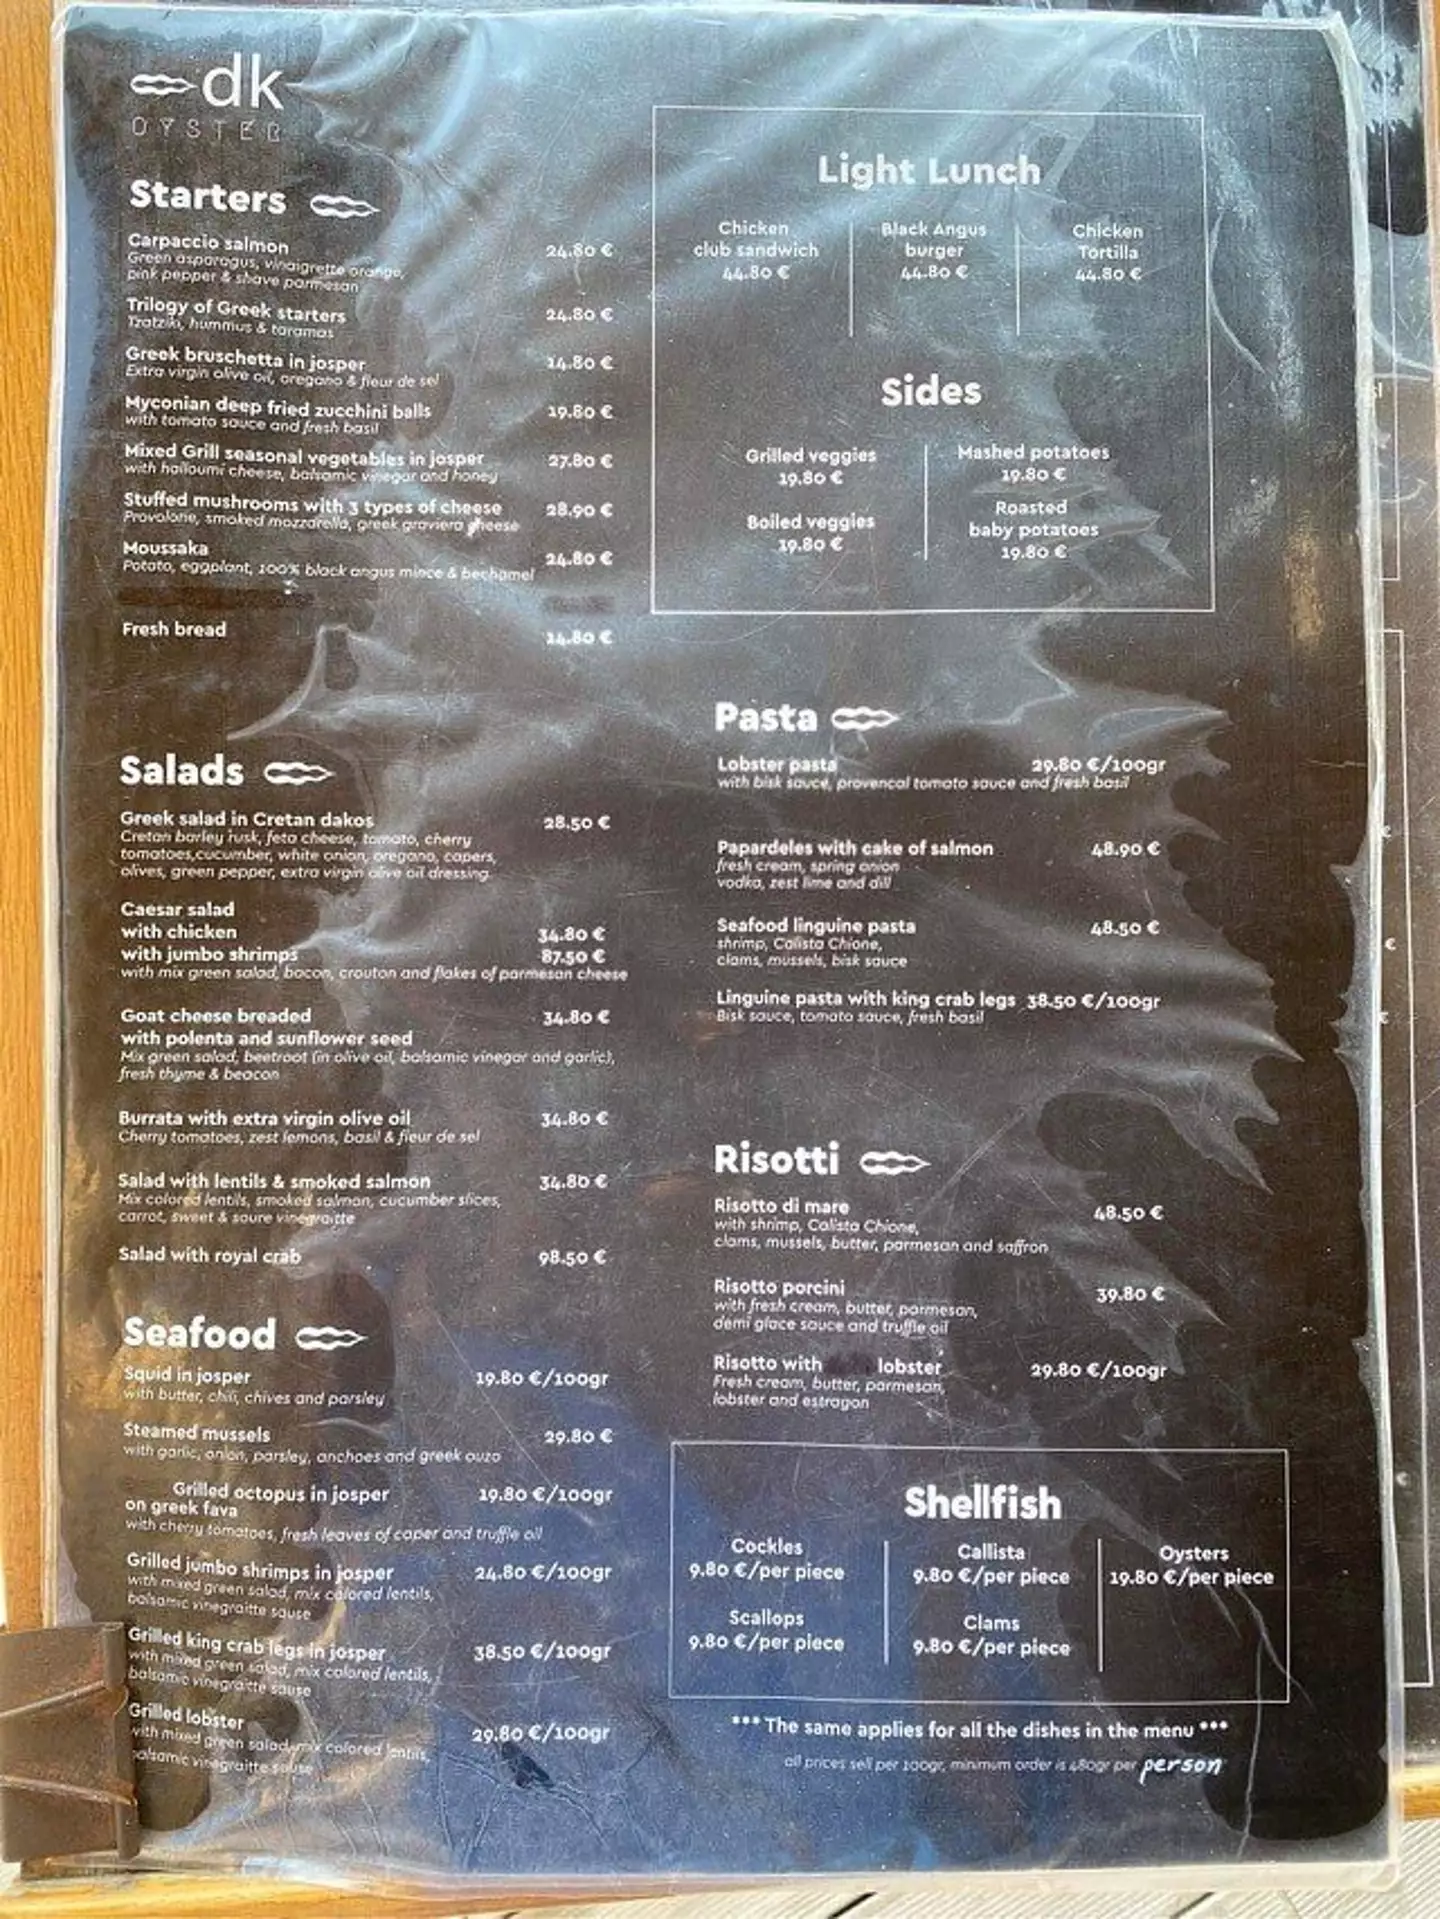 The restaurant shared some images of the menu (TripAdvisor)